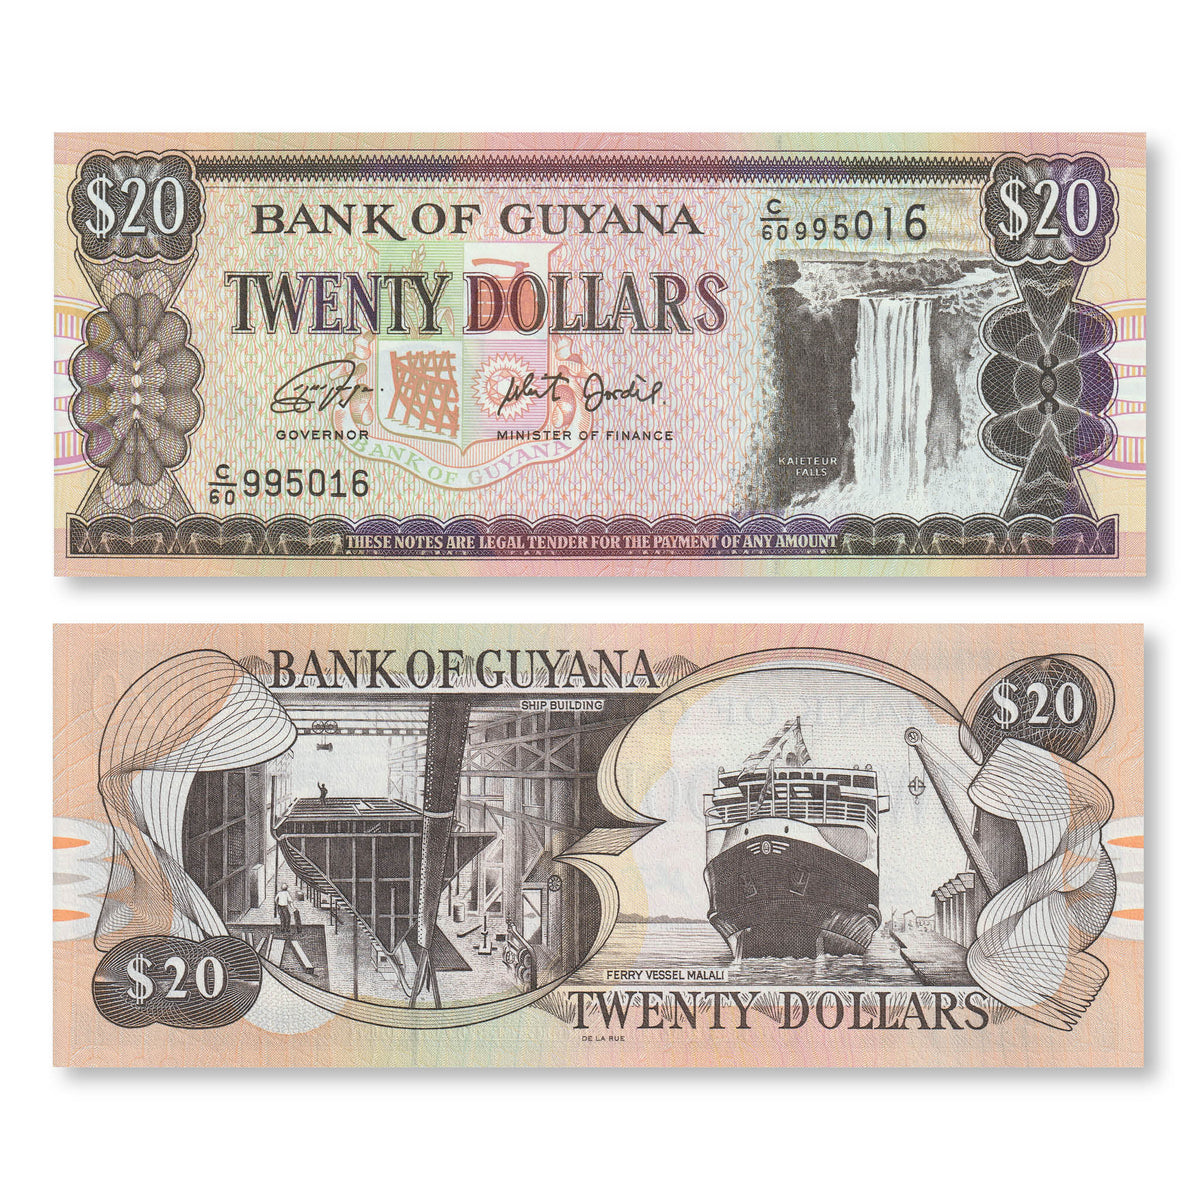 Guyana 20 Dollars, 2018, B108i, P30, UNC - Robert's World Money - World Banknotes